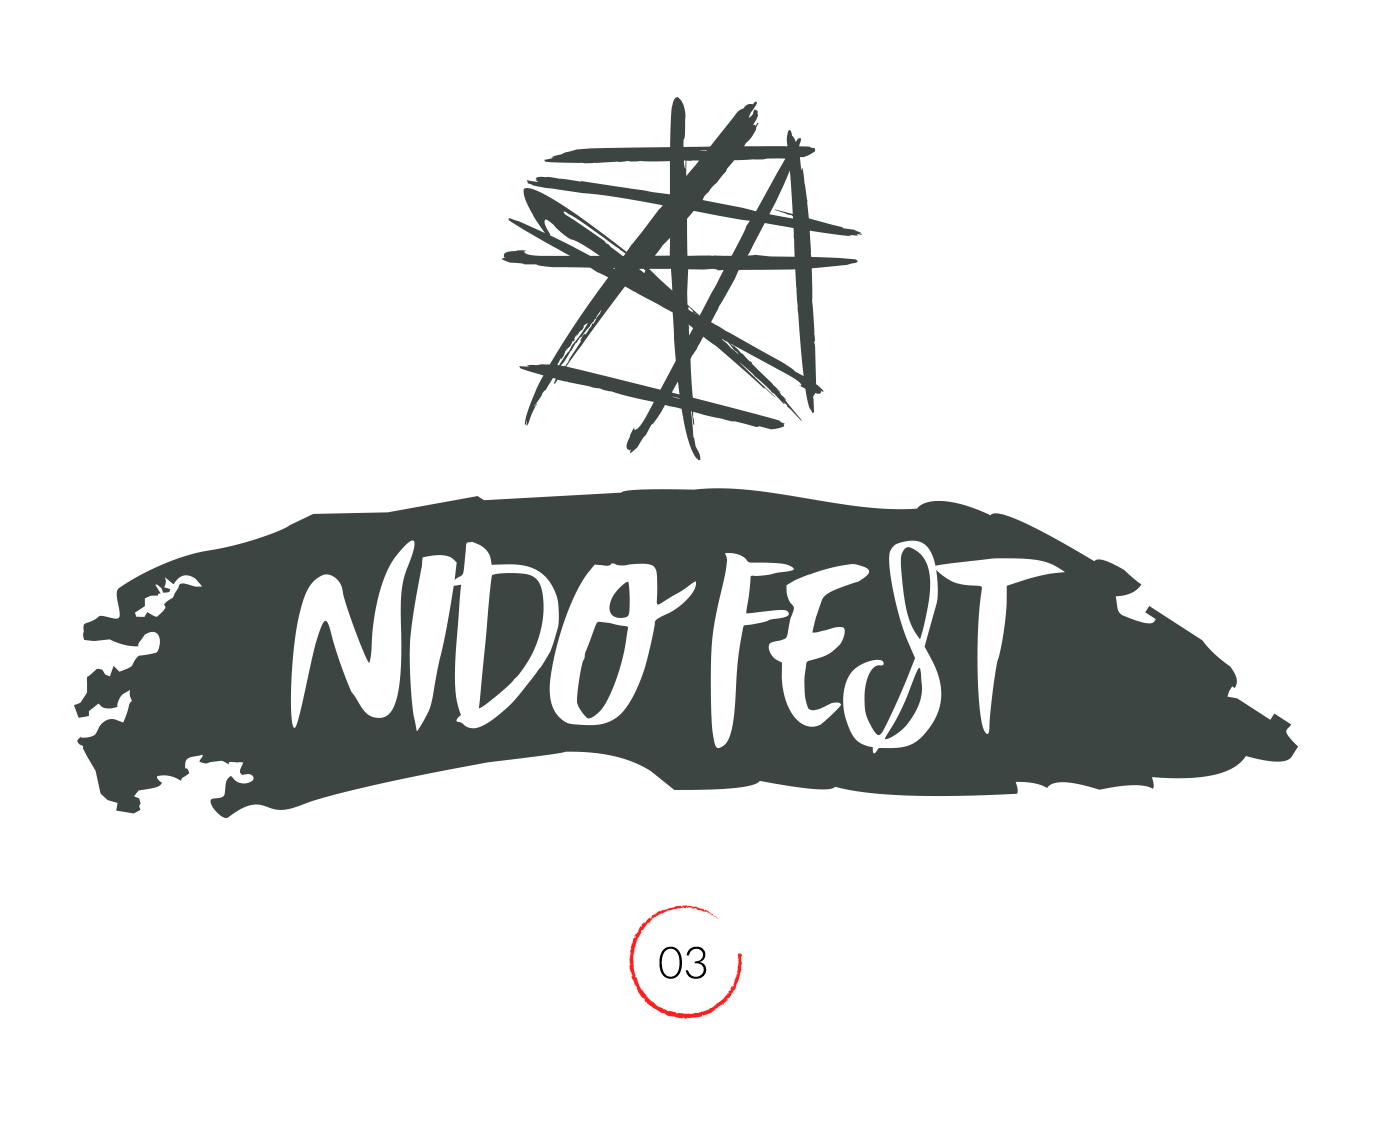 NidoFest logo proposal 03